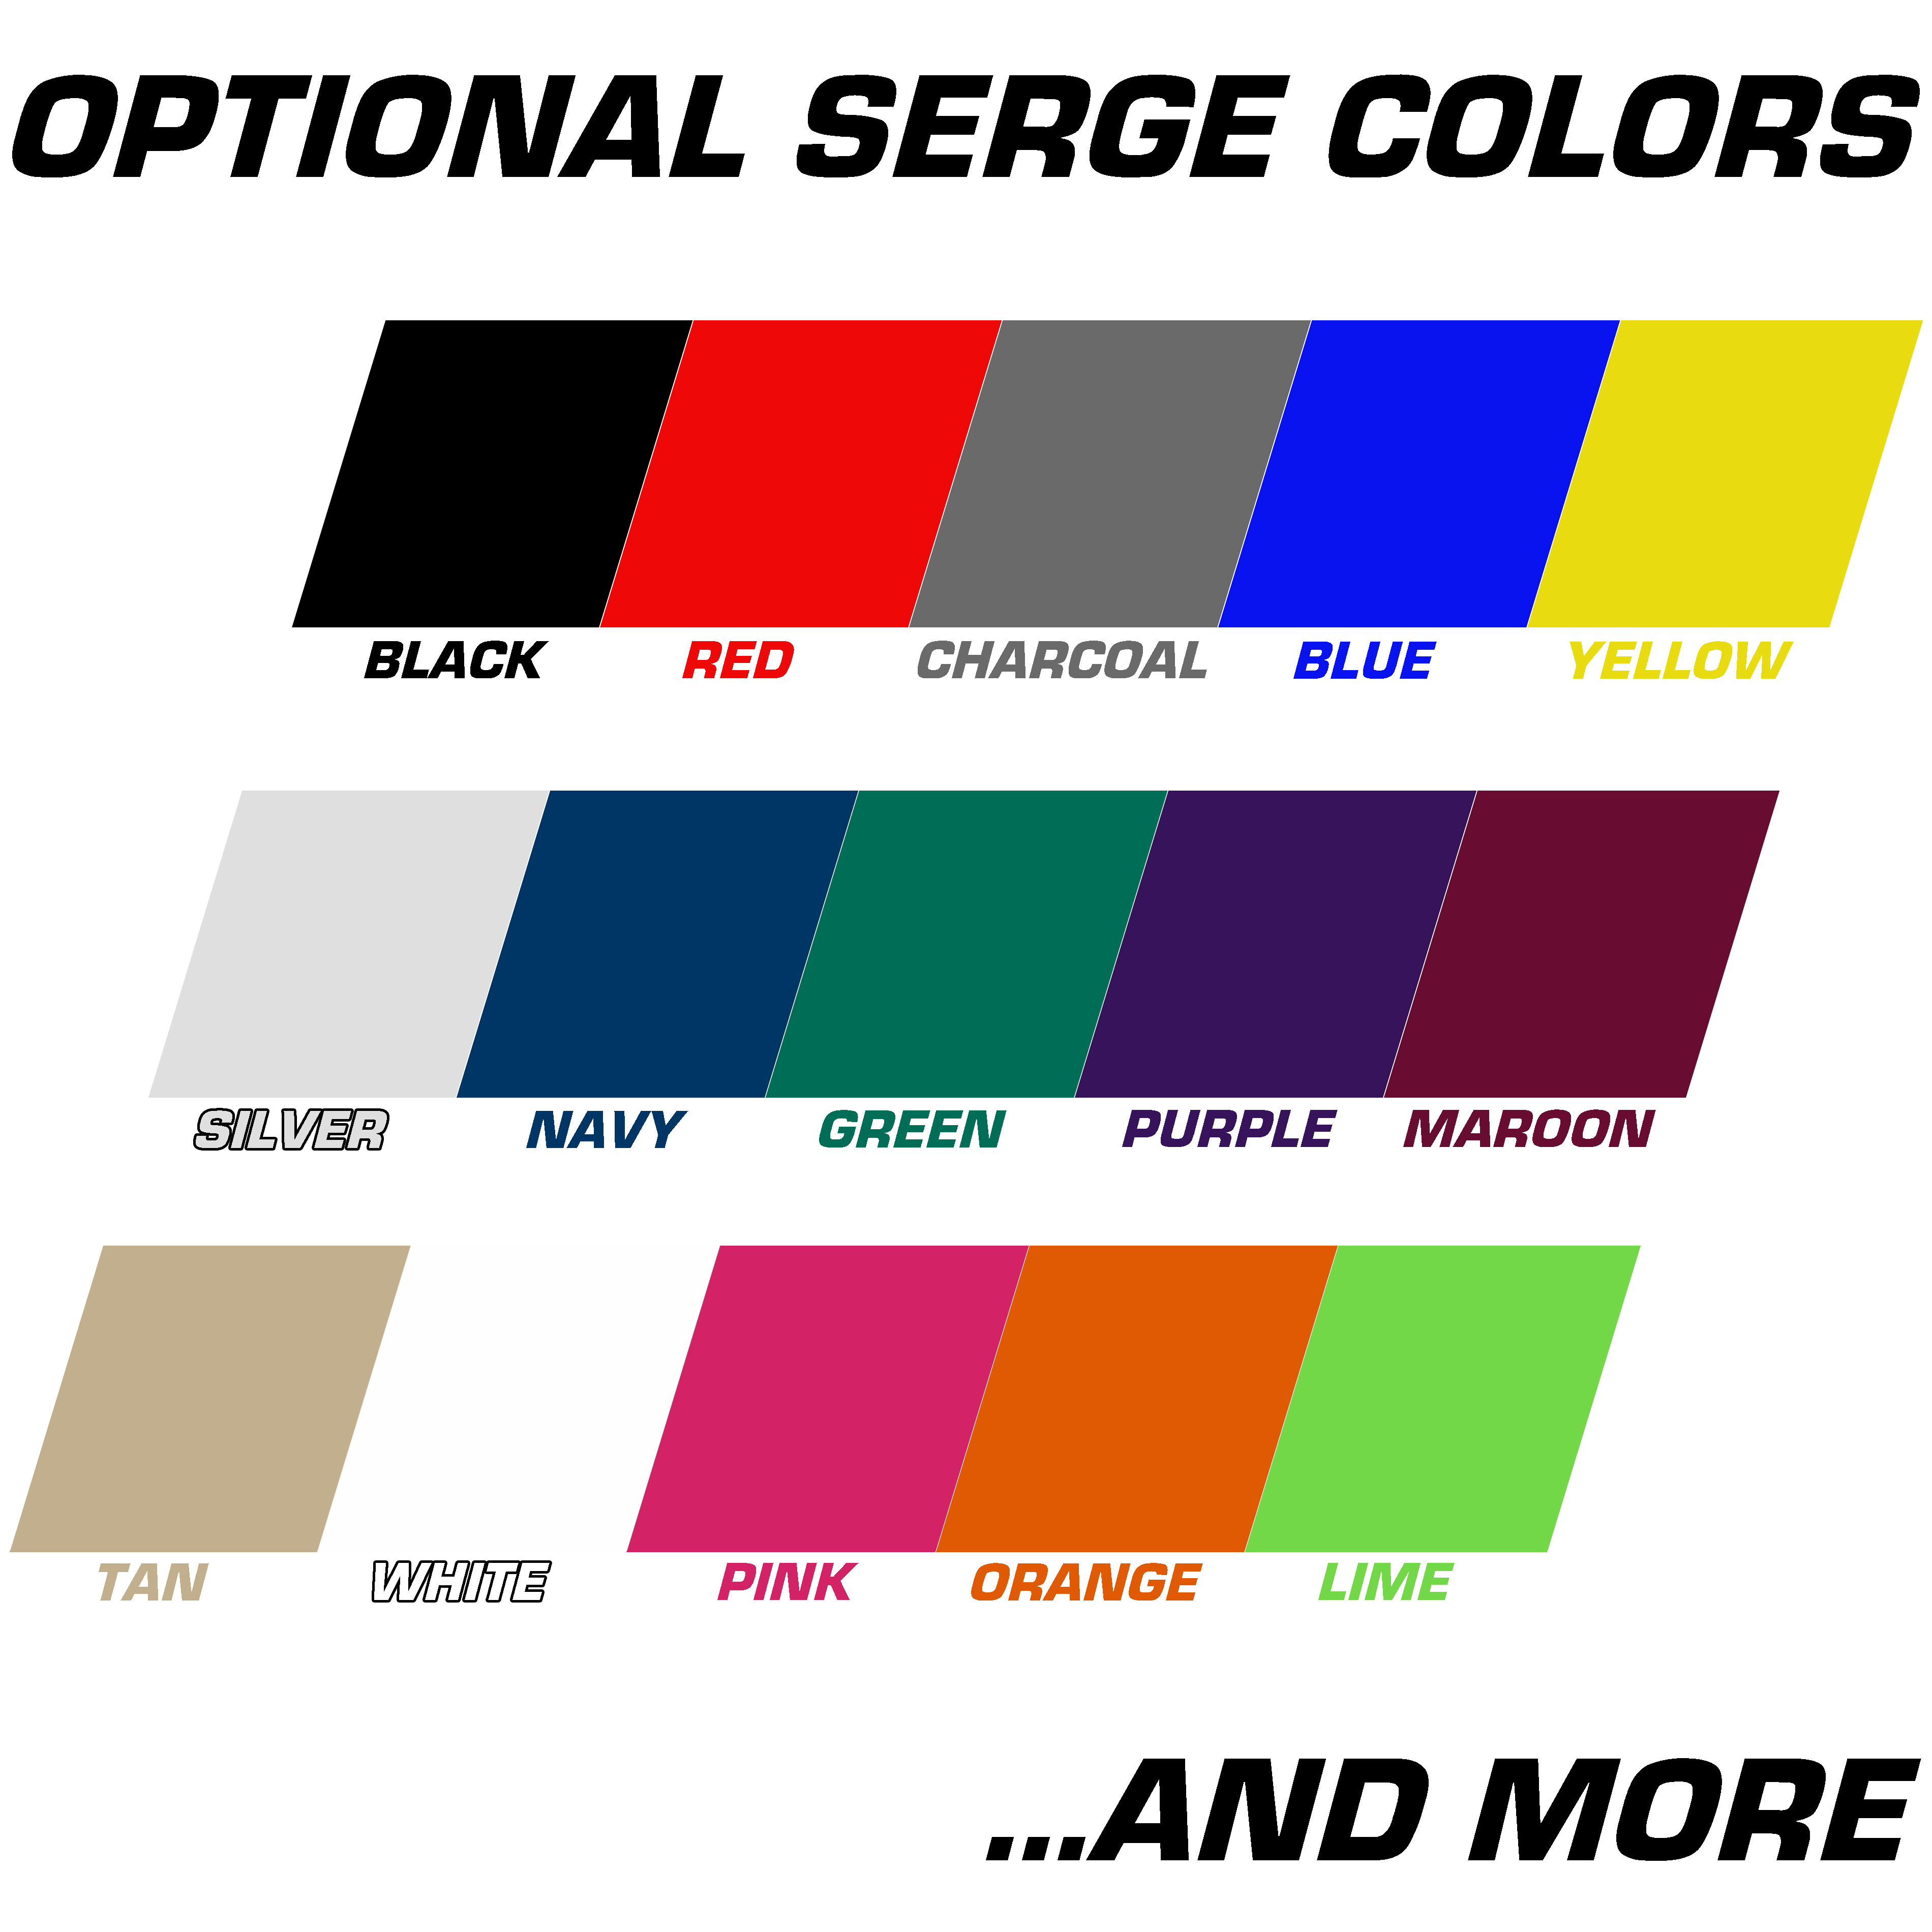 Optional Serge Colors